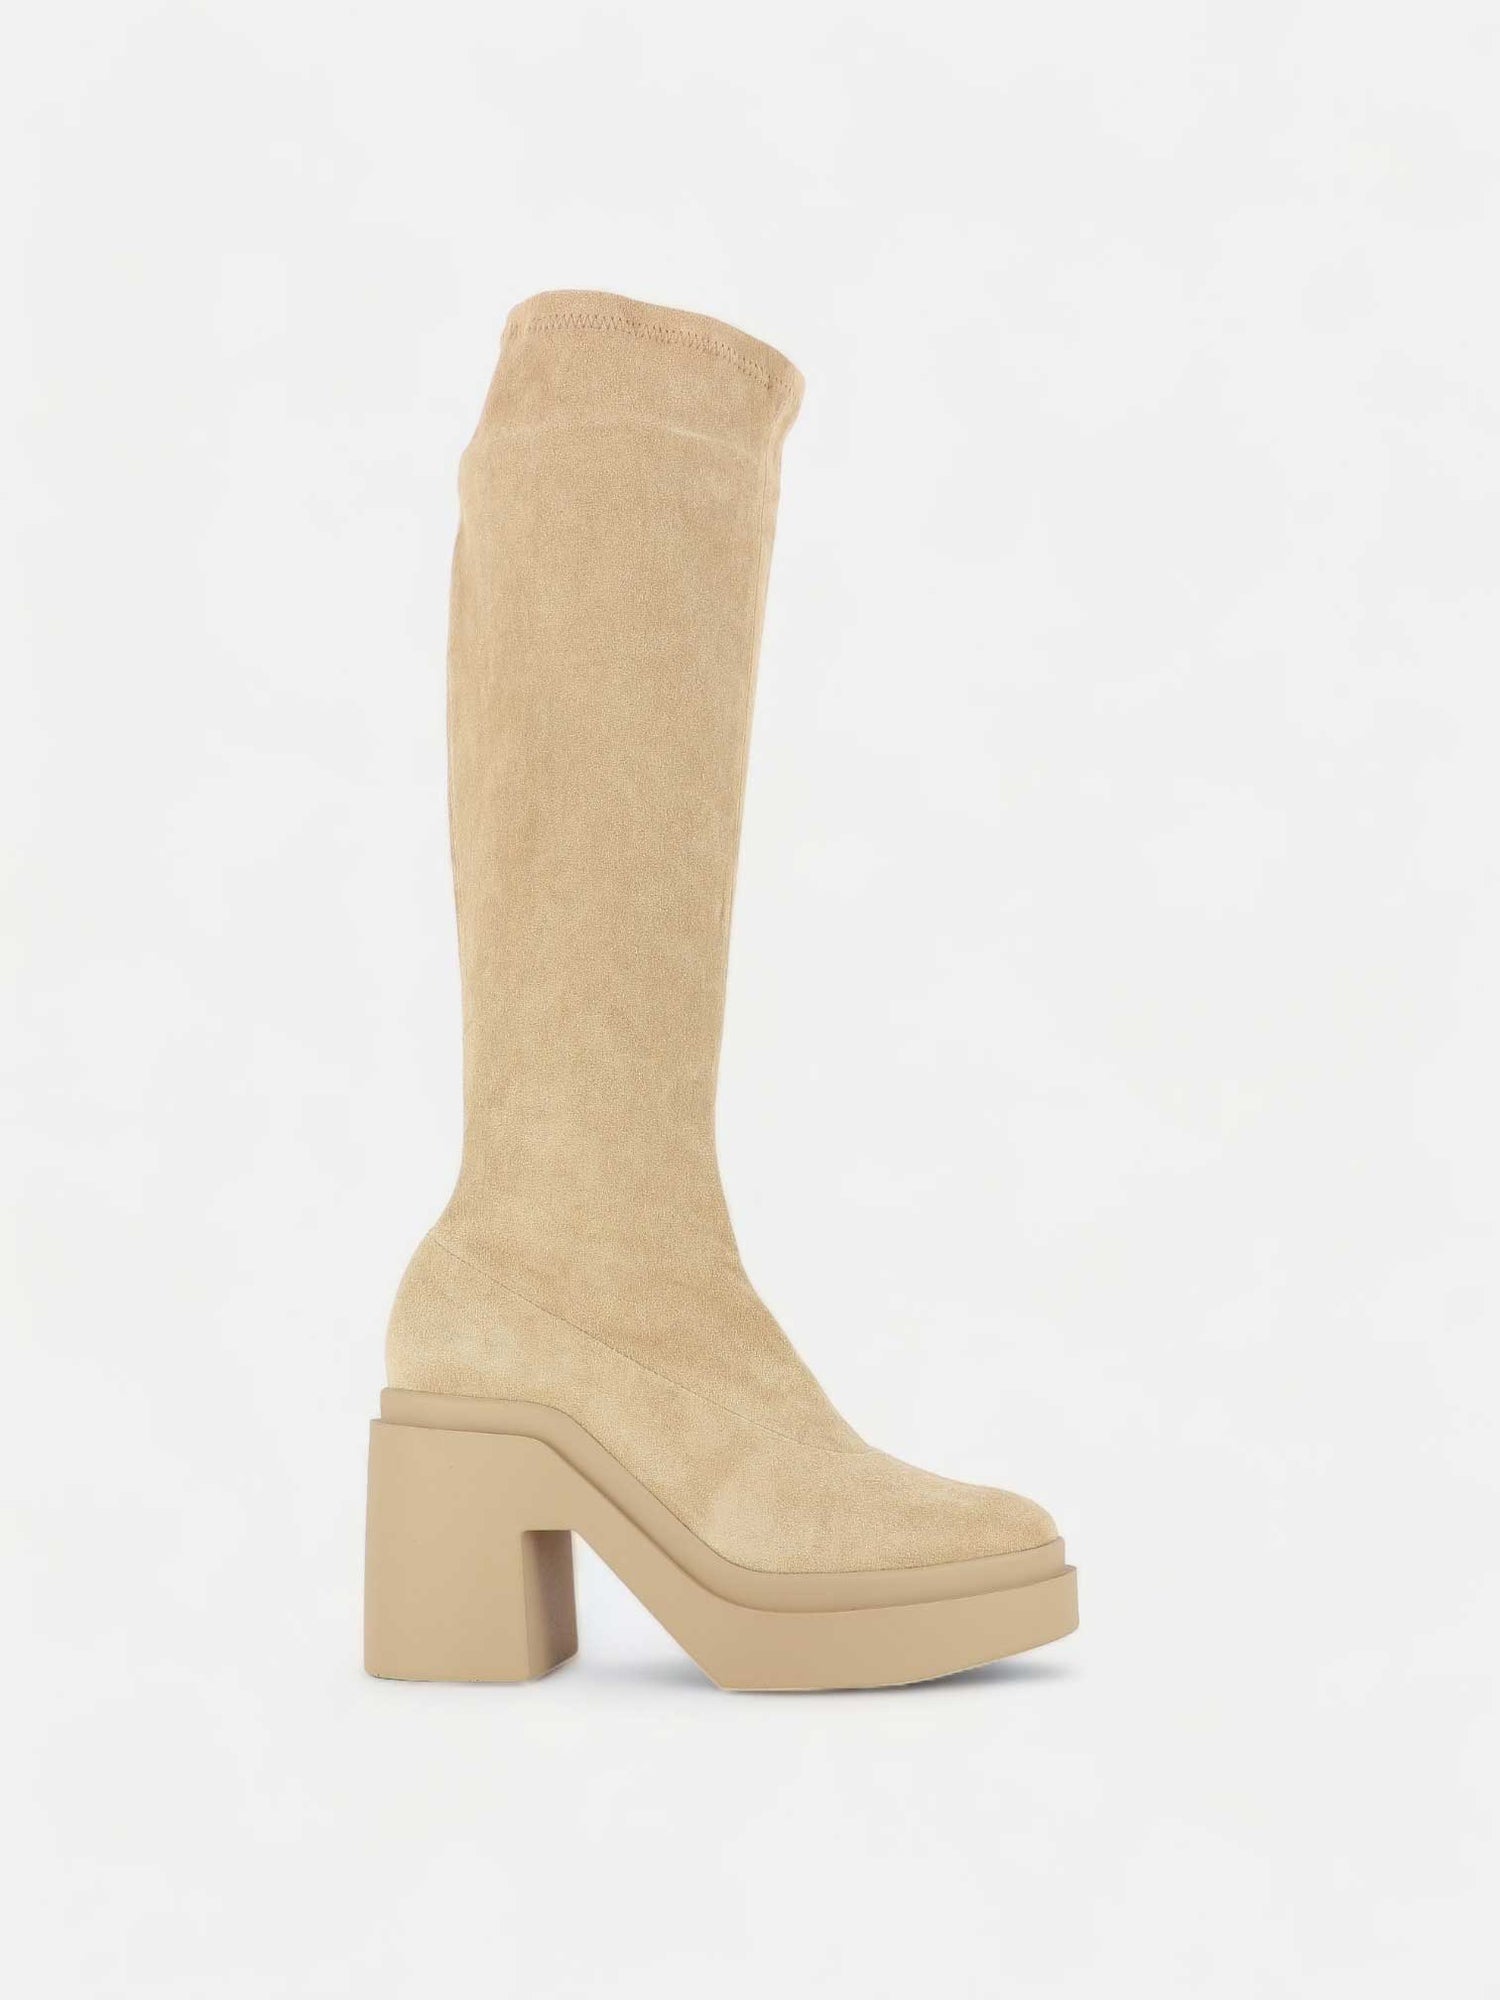 HIGH BOOTS - NALINI boots, stretch suede lambskin beige - 3606063818629 - Clergerie Paris - Europe